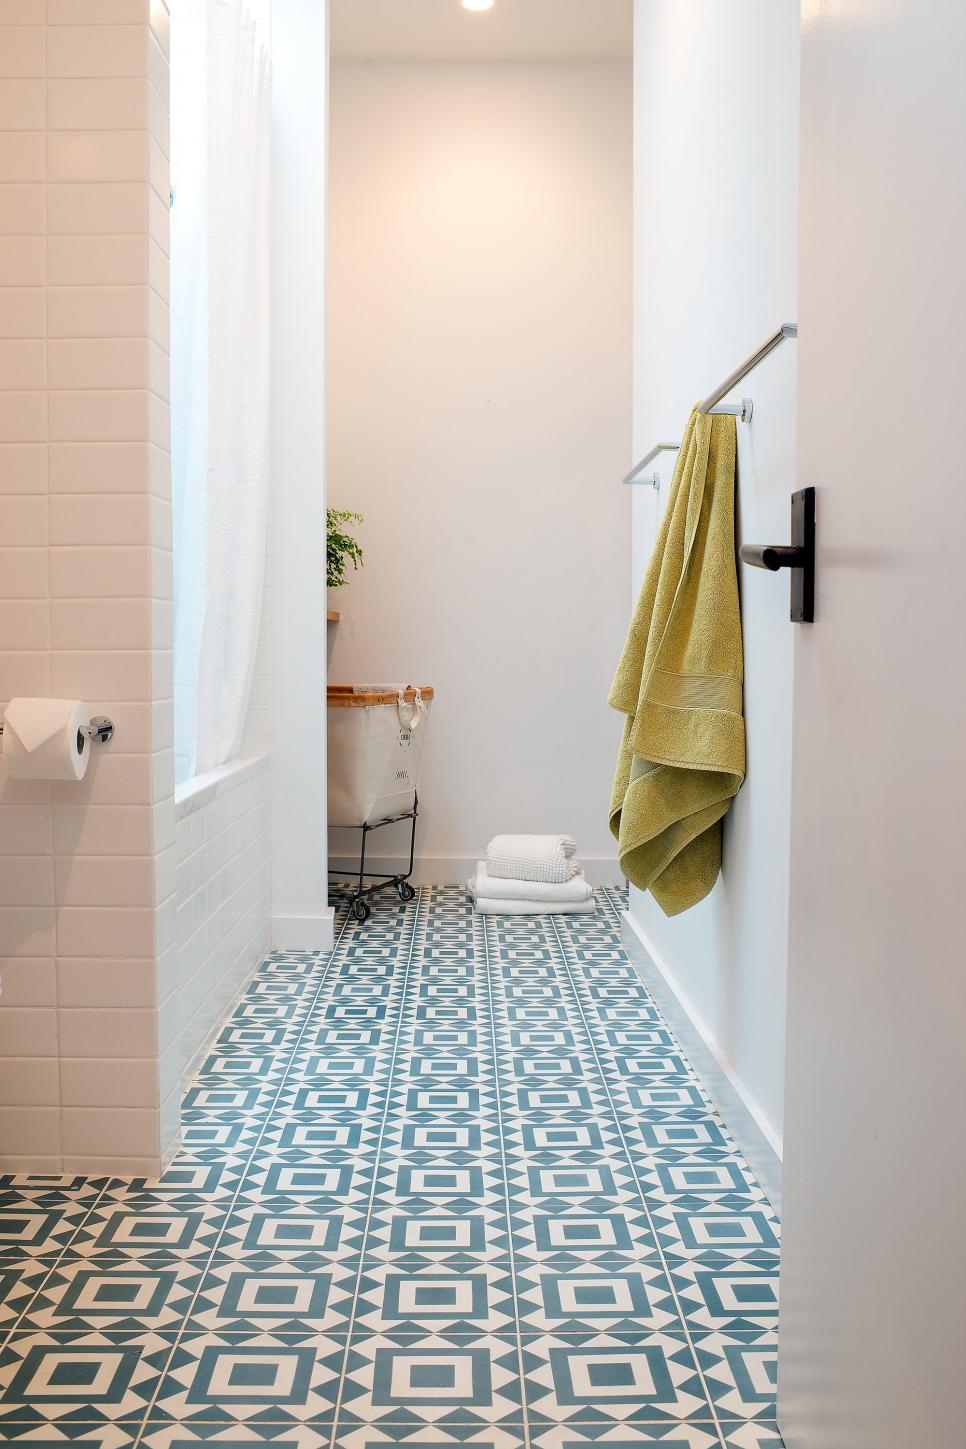 Geometric Tile Floor Adds Interest to Bathroom | HGTV